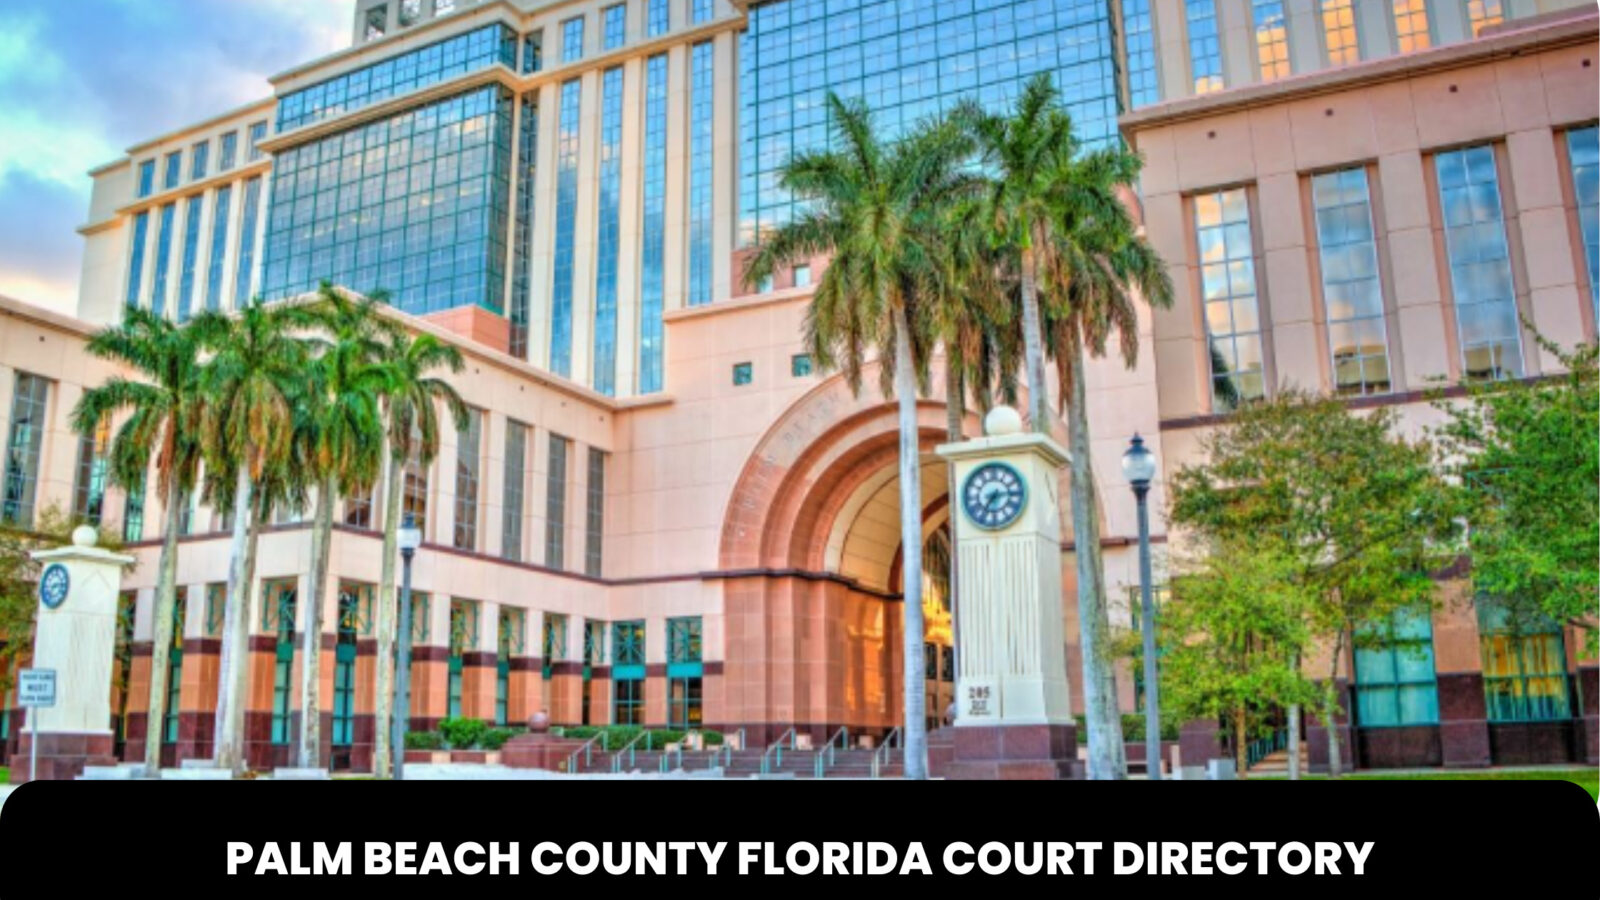 Palm Beach County Florida Court Directory